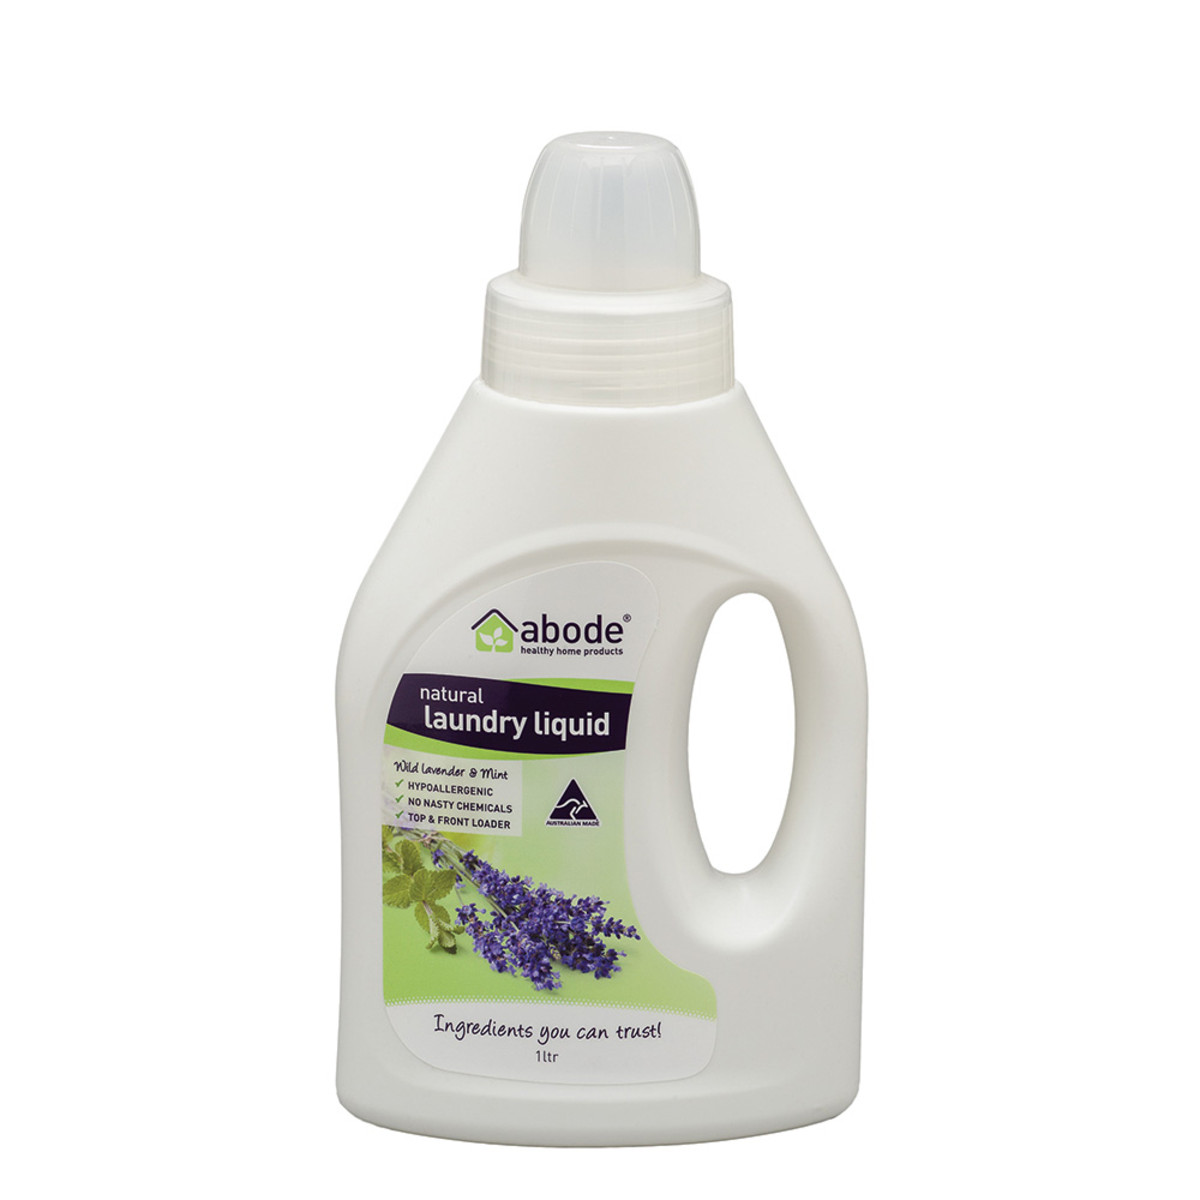 ABODE - Laundry Liquid (Front & Top Loader) Wild Lavender & Mint